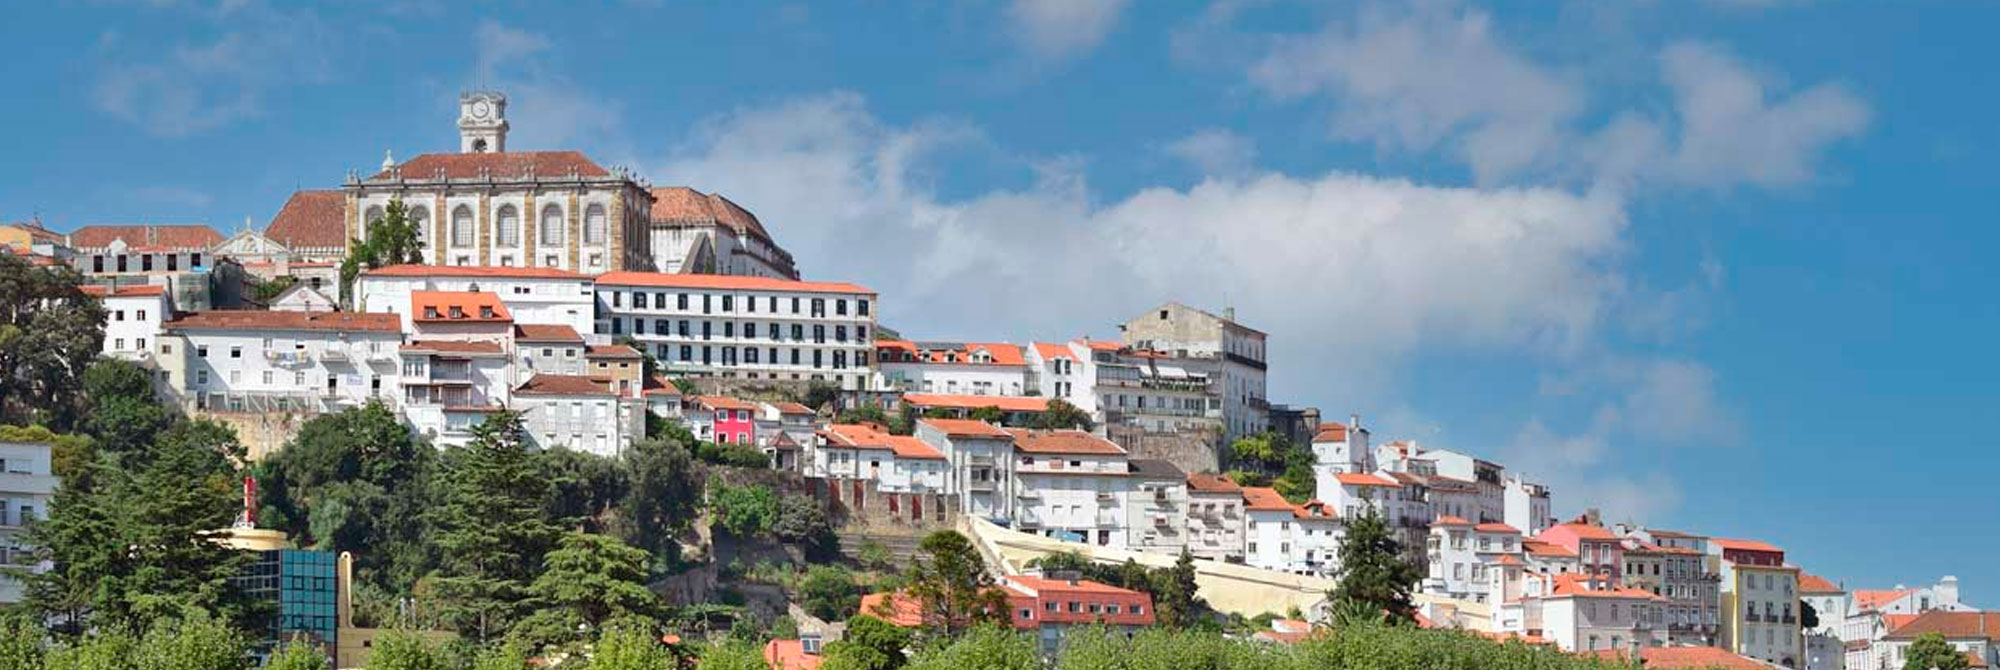 Residencia De Estudiantes Coimbra Student Accommodation In Portugal